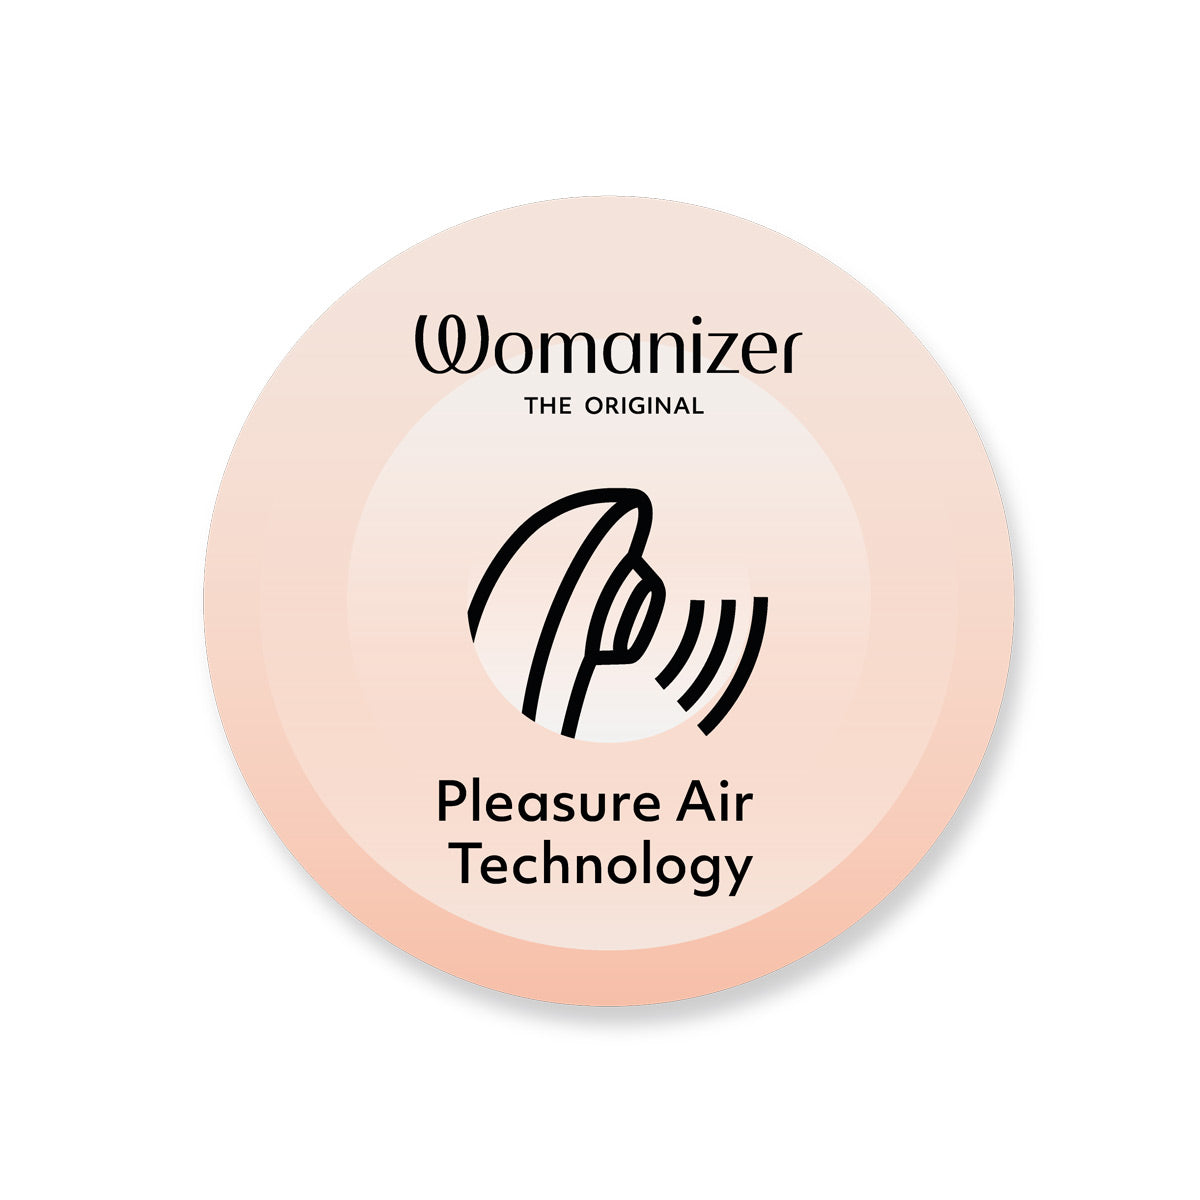 Womanizer- The Original - Relaunch Merch Kit